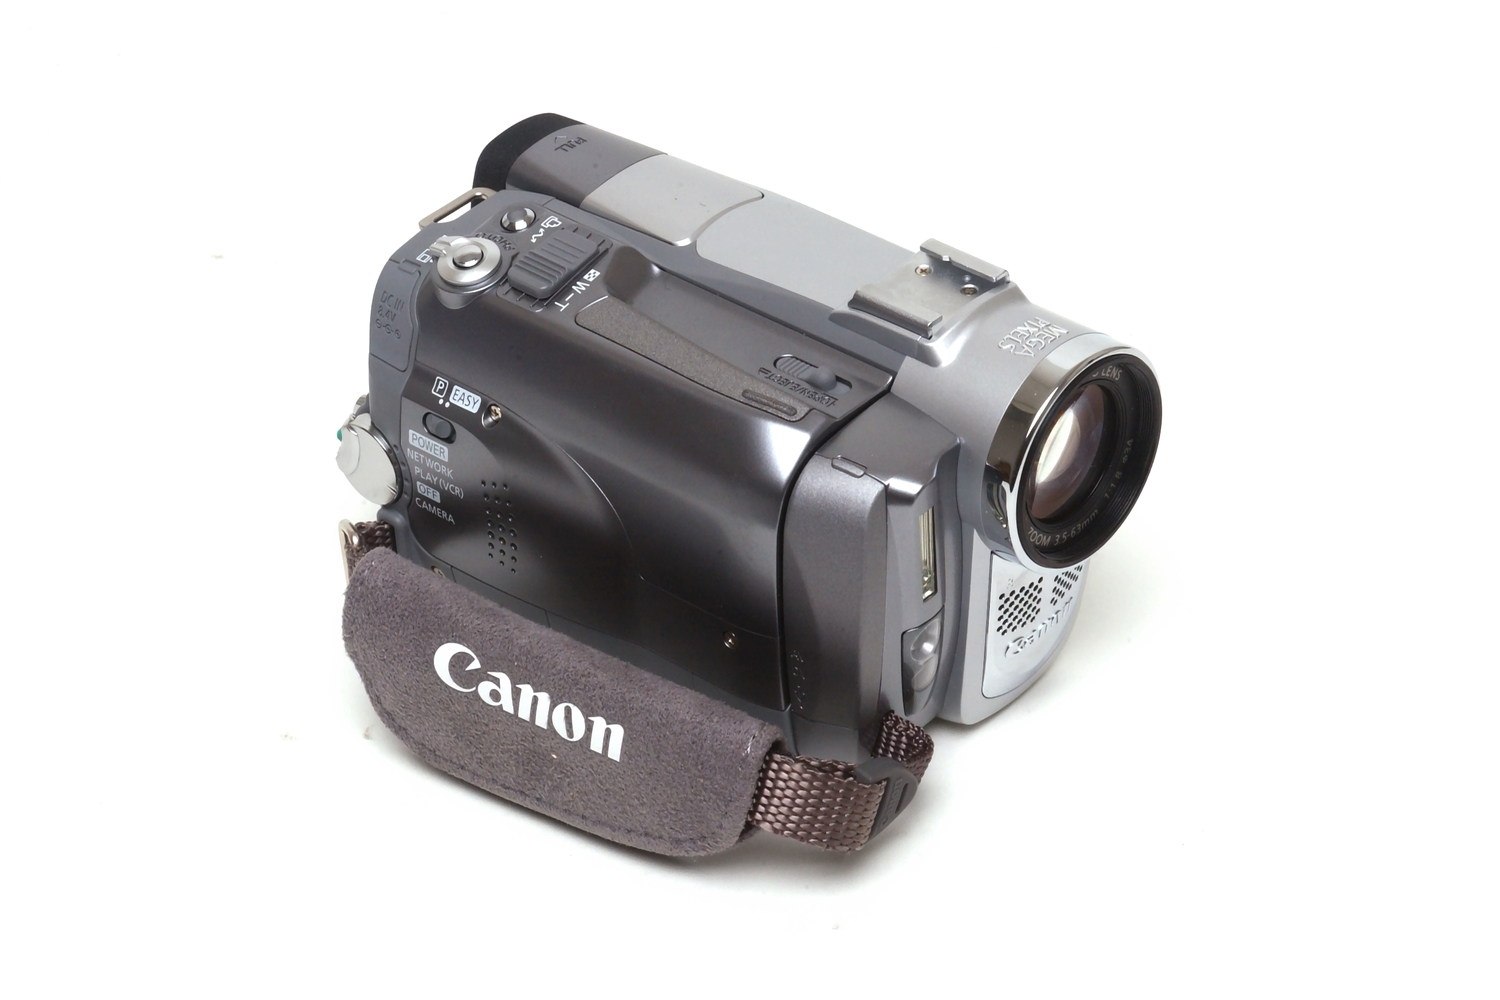 mvx330i digital camcorder